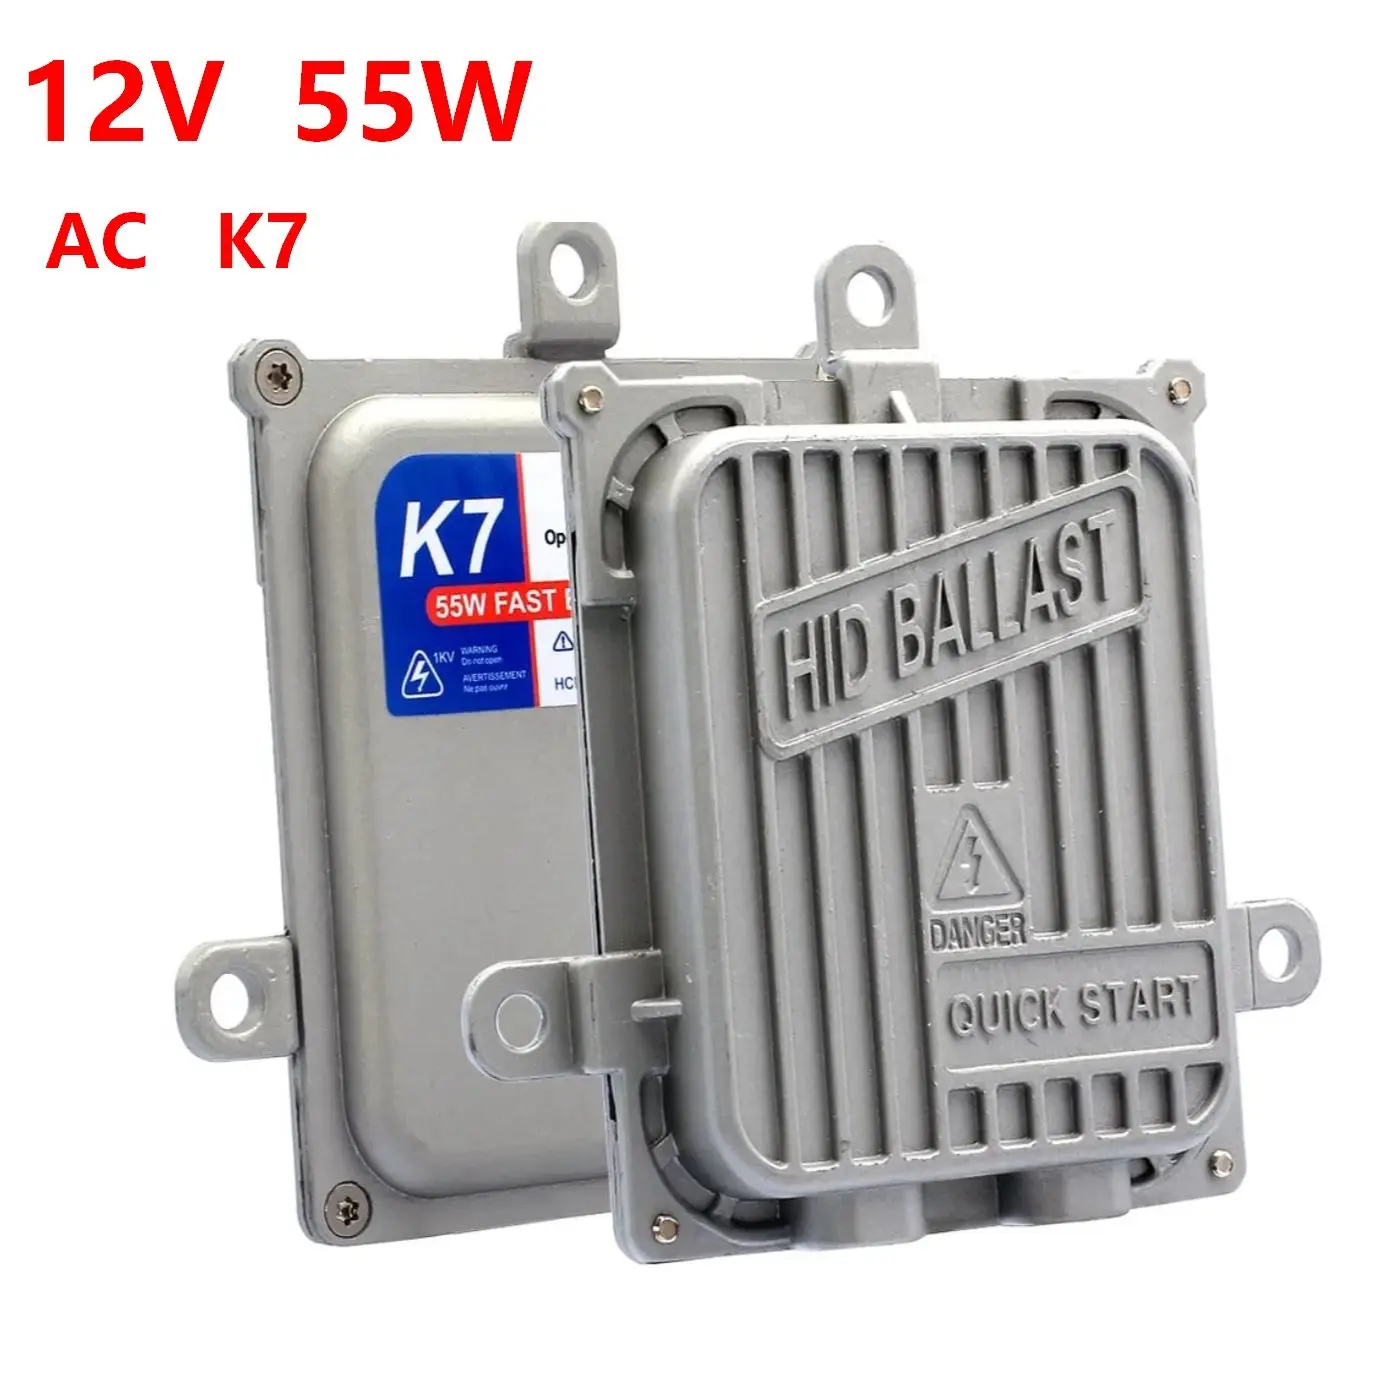 

2PCS K7 AC 55W Xenon Ballasts Fast Bright 4500LM For H1 H3 H7 H11 9005 9006 Bixenon Headlamps D2H 12V Cars HID Headlights